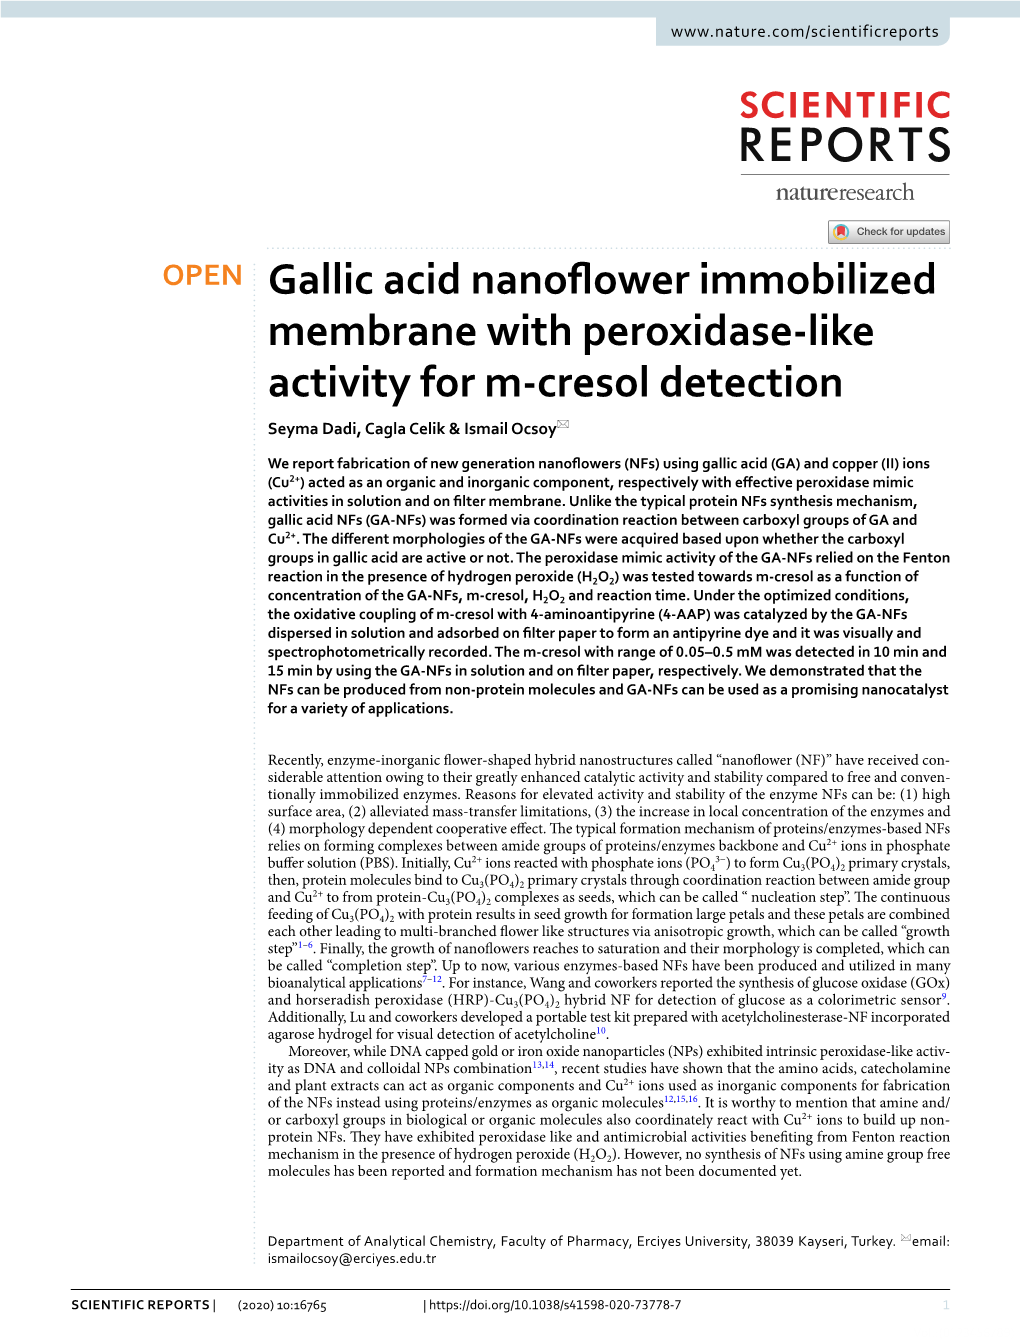 Gallic Acid Nanoflower Immobilized Membrane with Peroxidase-Like